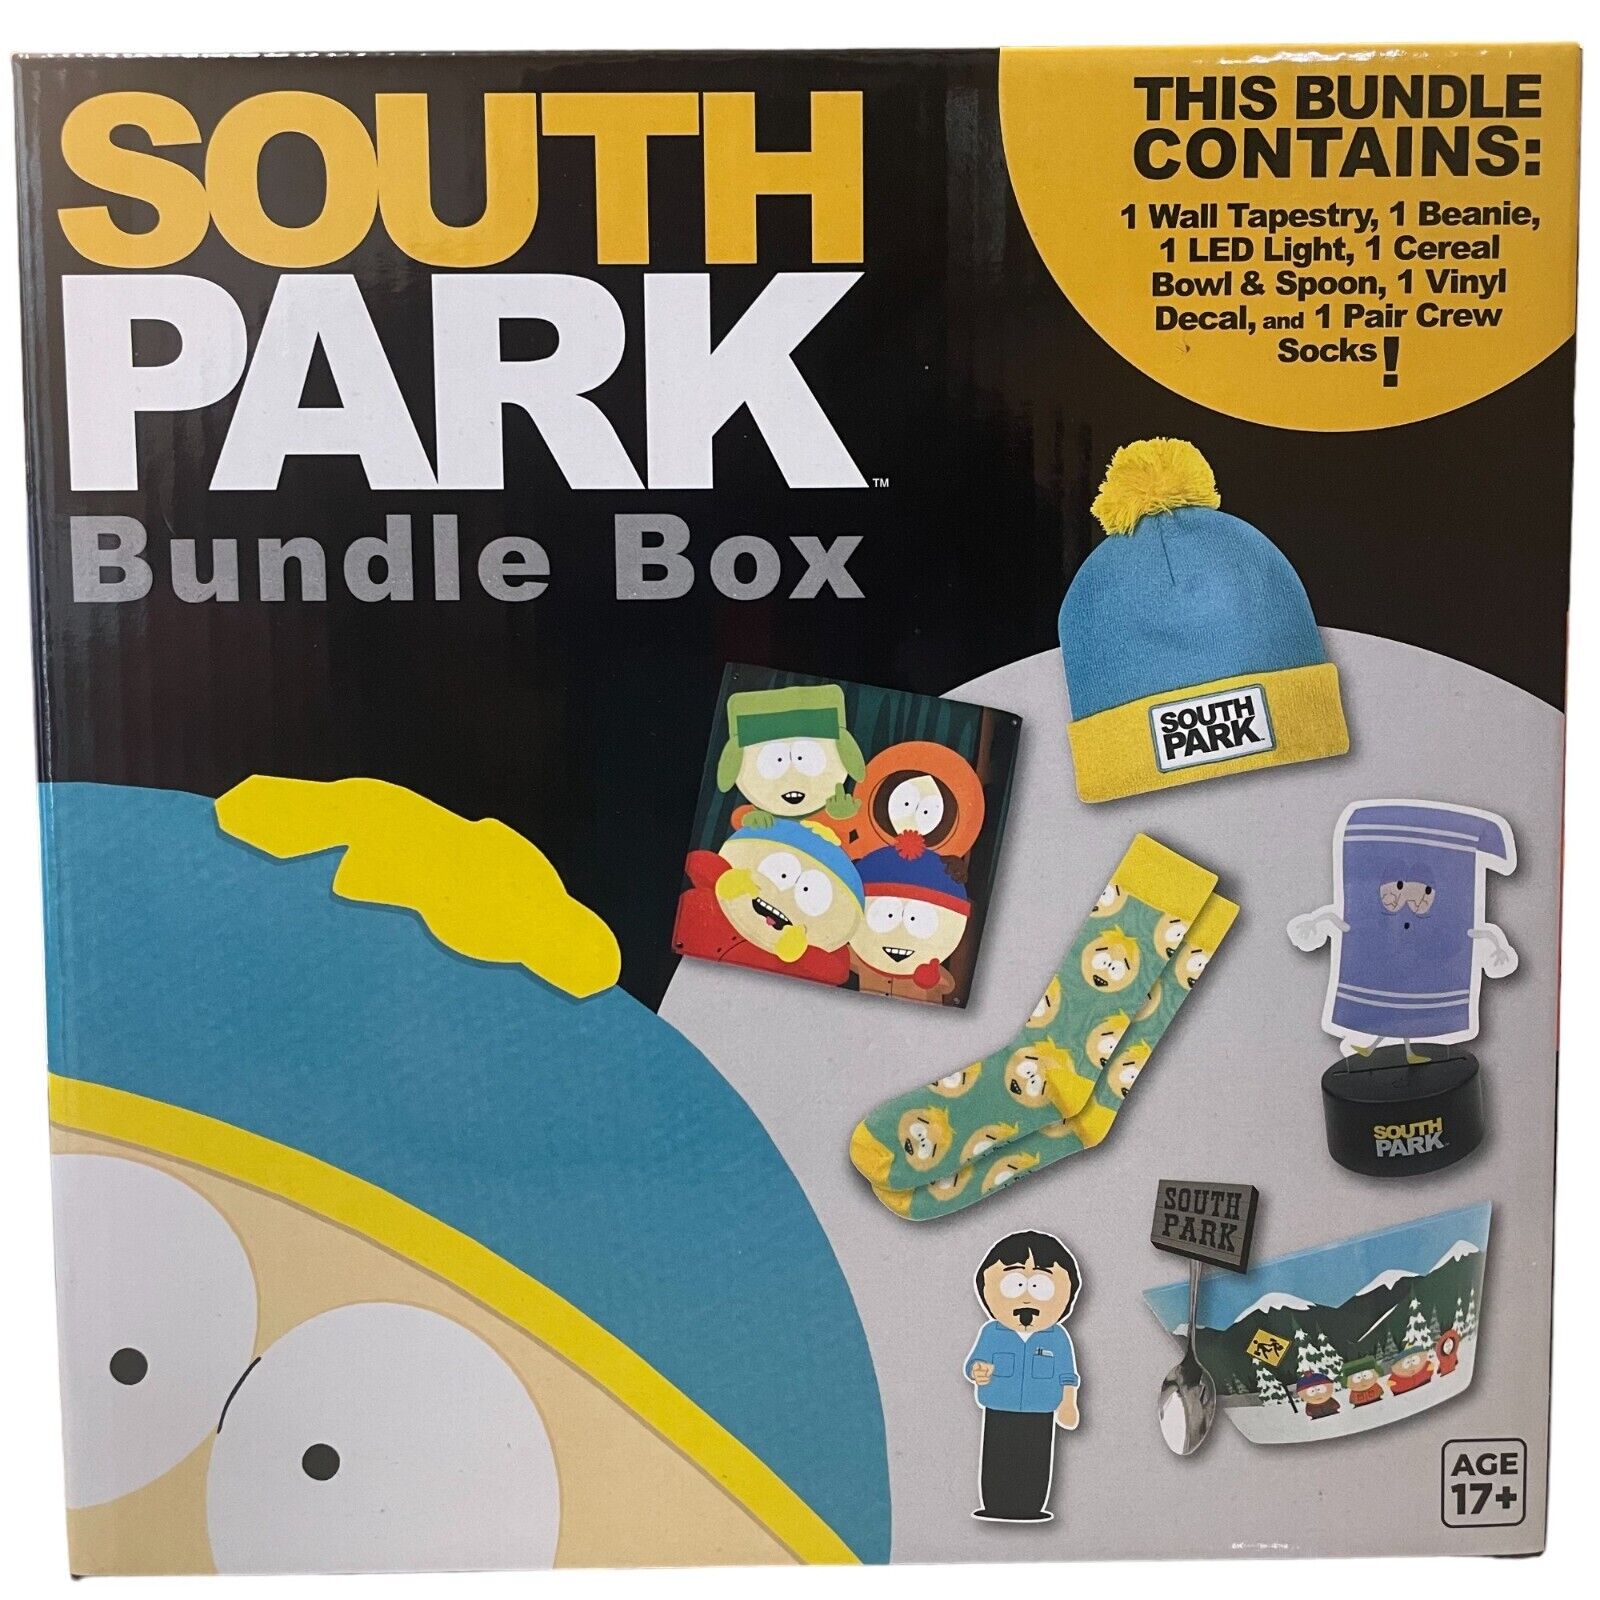 Culturefly's Hella Cool South Park Bundle Box 7 New South Park Items Get It Now